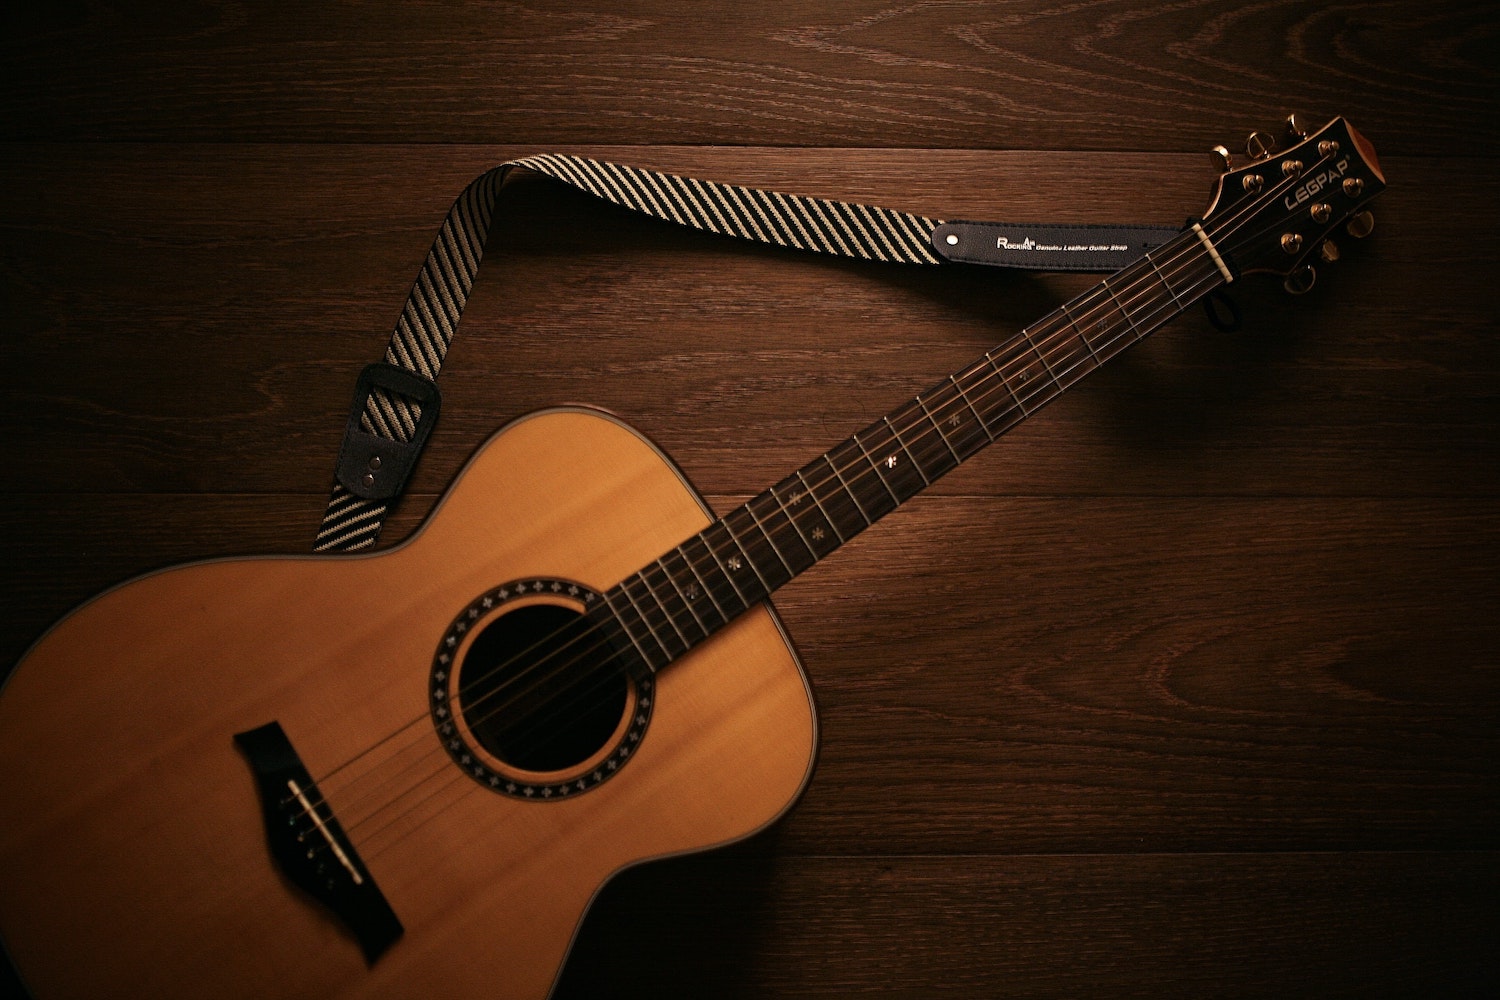 Photograph of a guitar